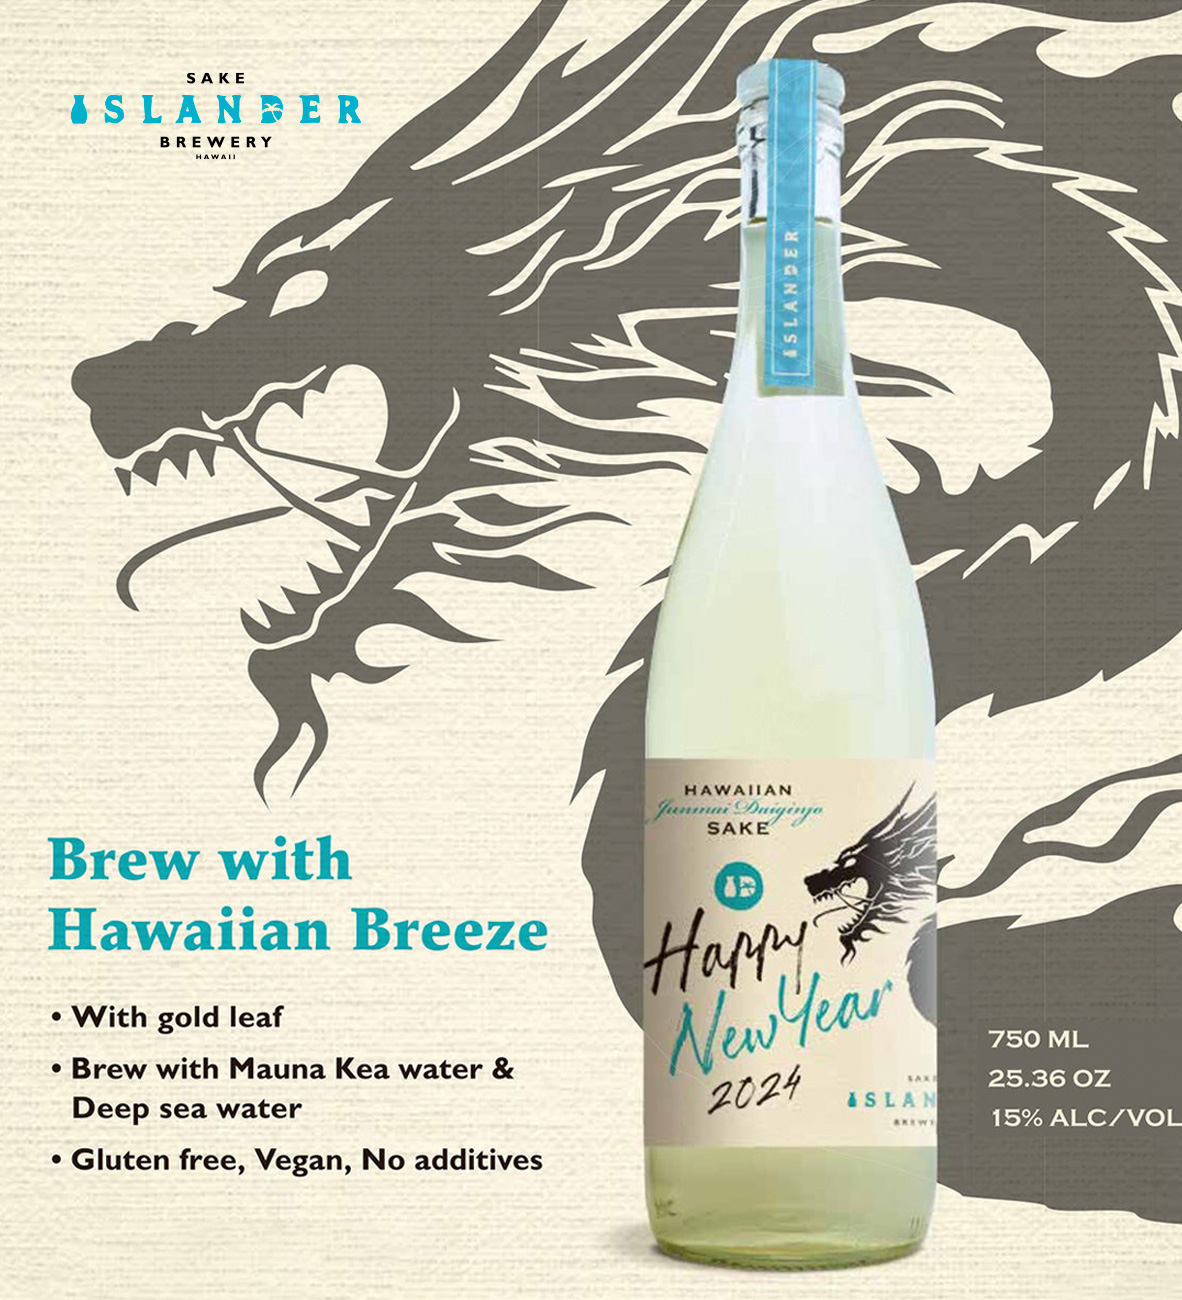 Islander Sake Brewery ニューイヤー大吟醸（ドラゴン）